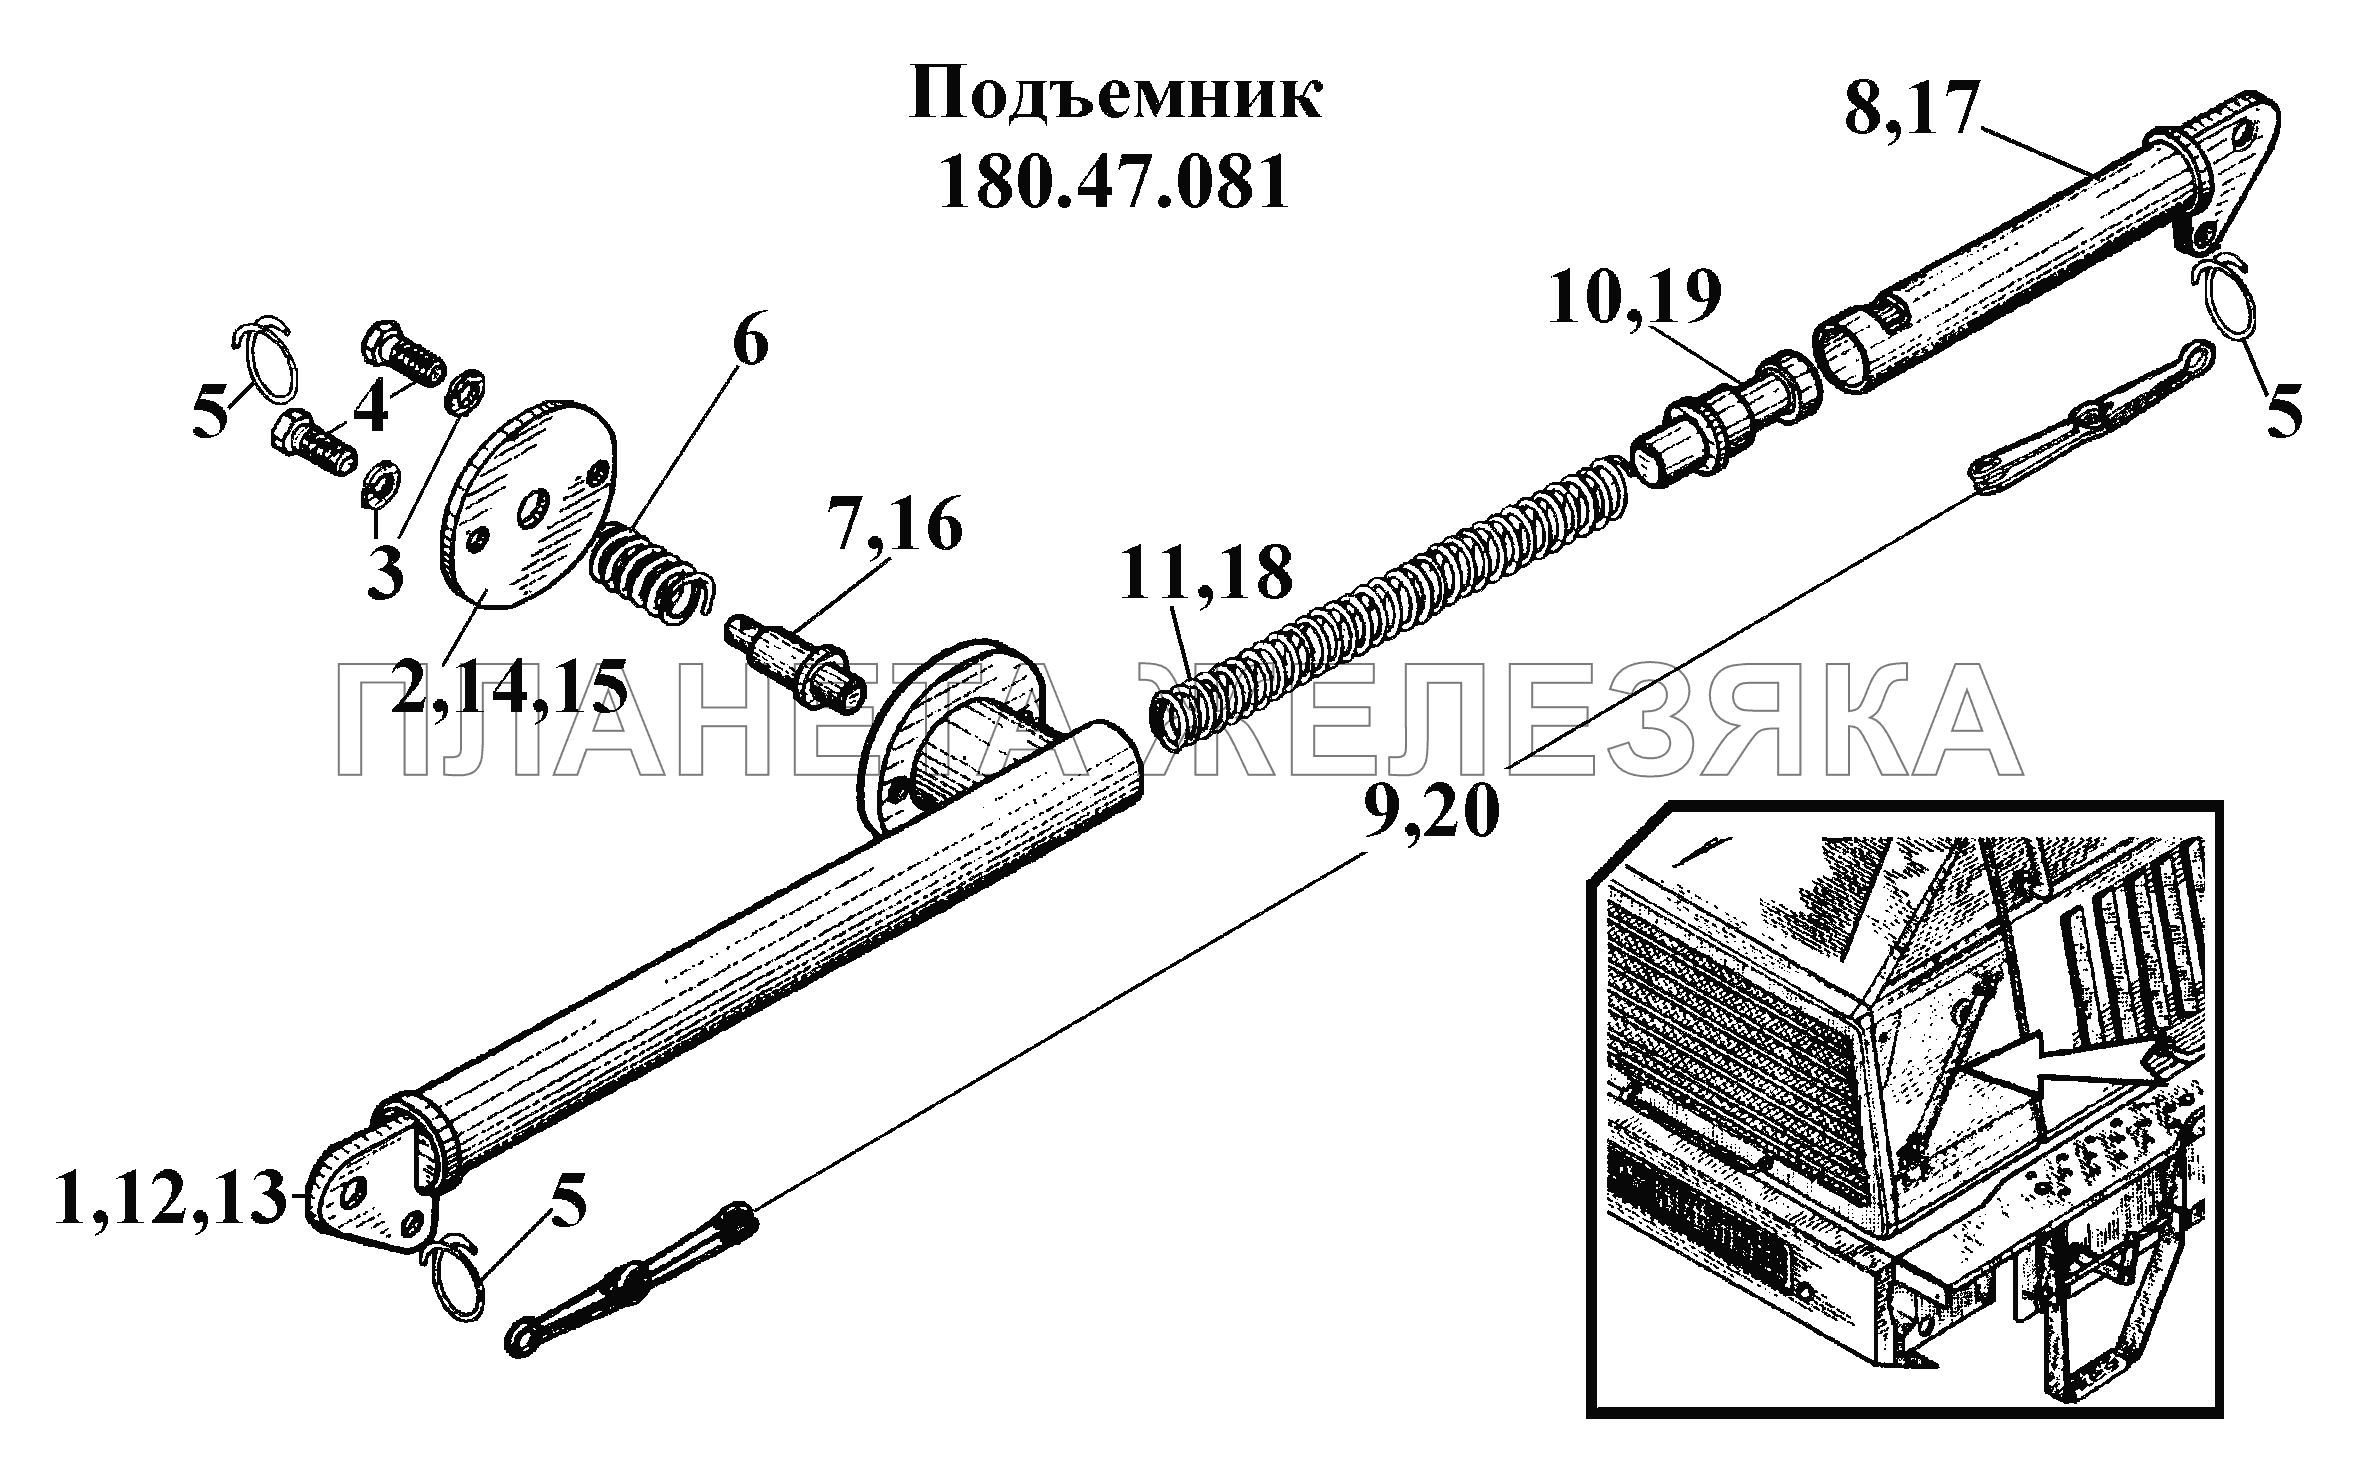 Подъемник (1) ВТ-100Д